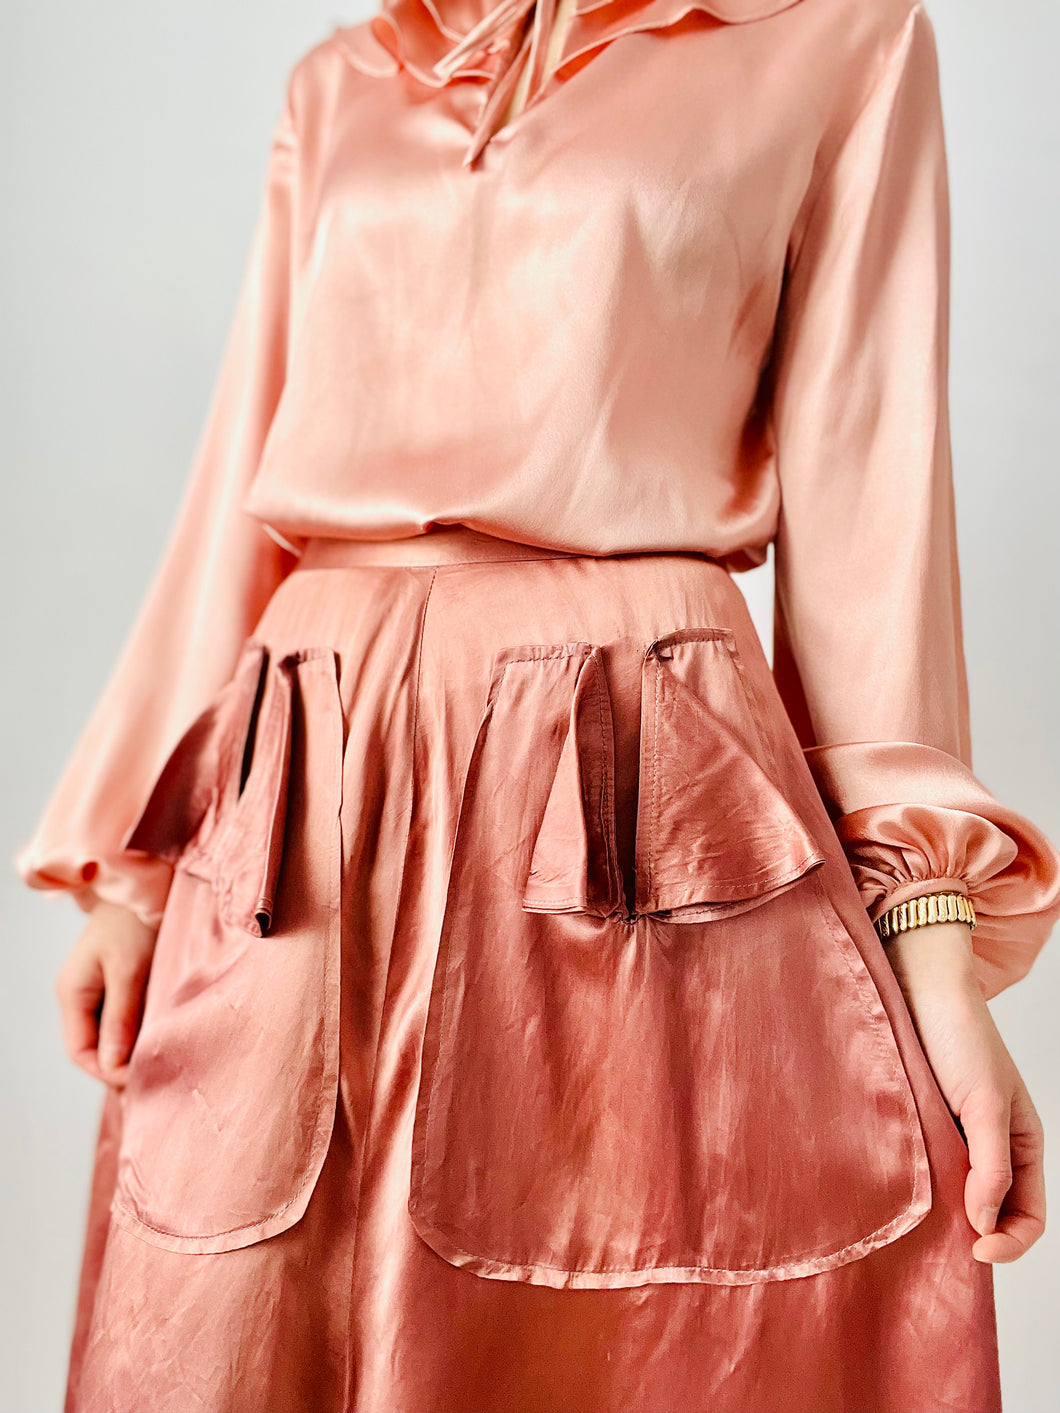 Vintage 1940s pink satin skirt